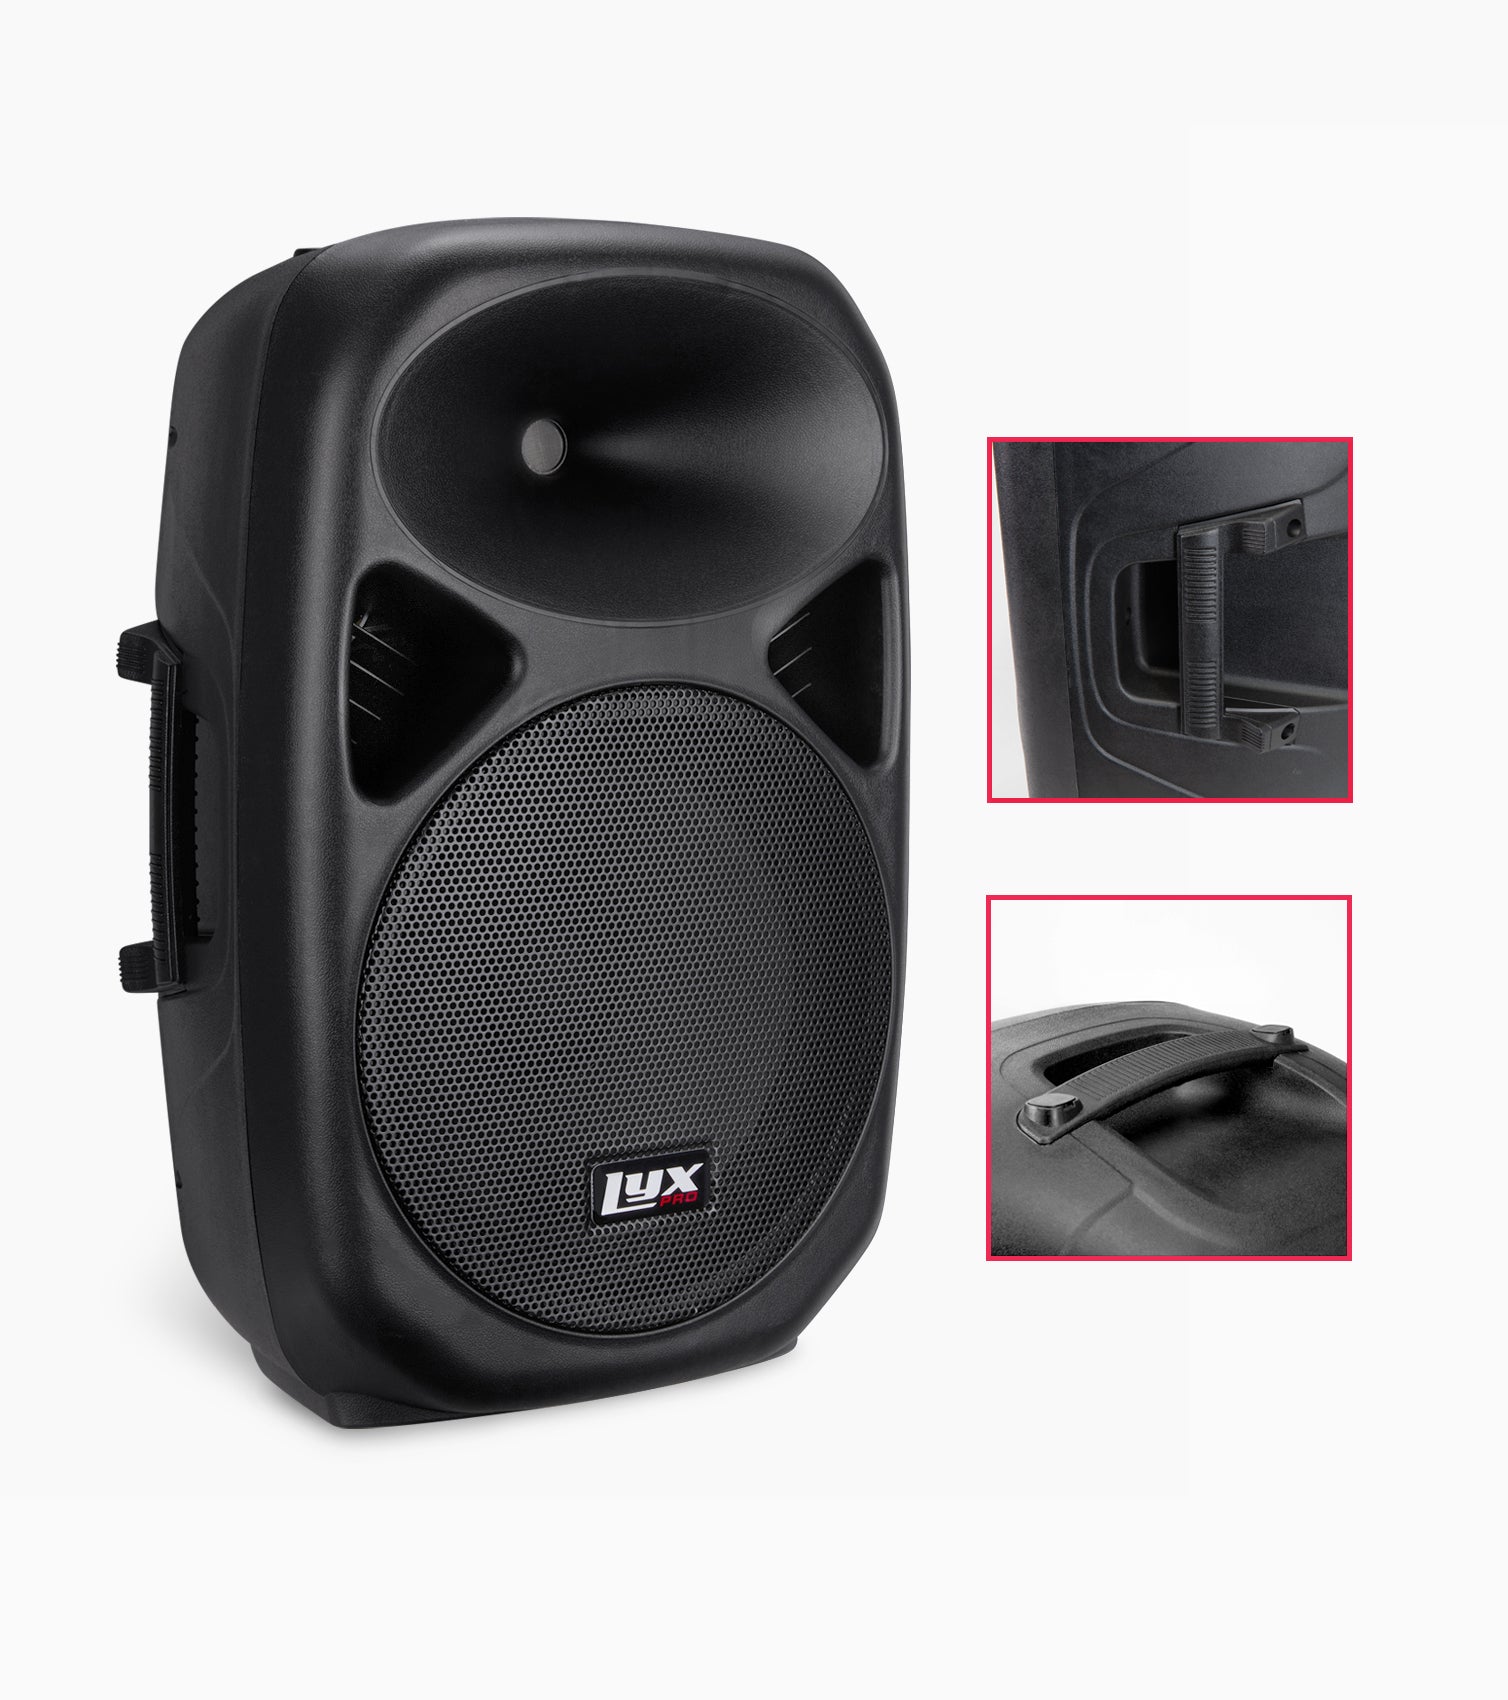  12” portable PA speaker parts